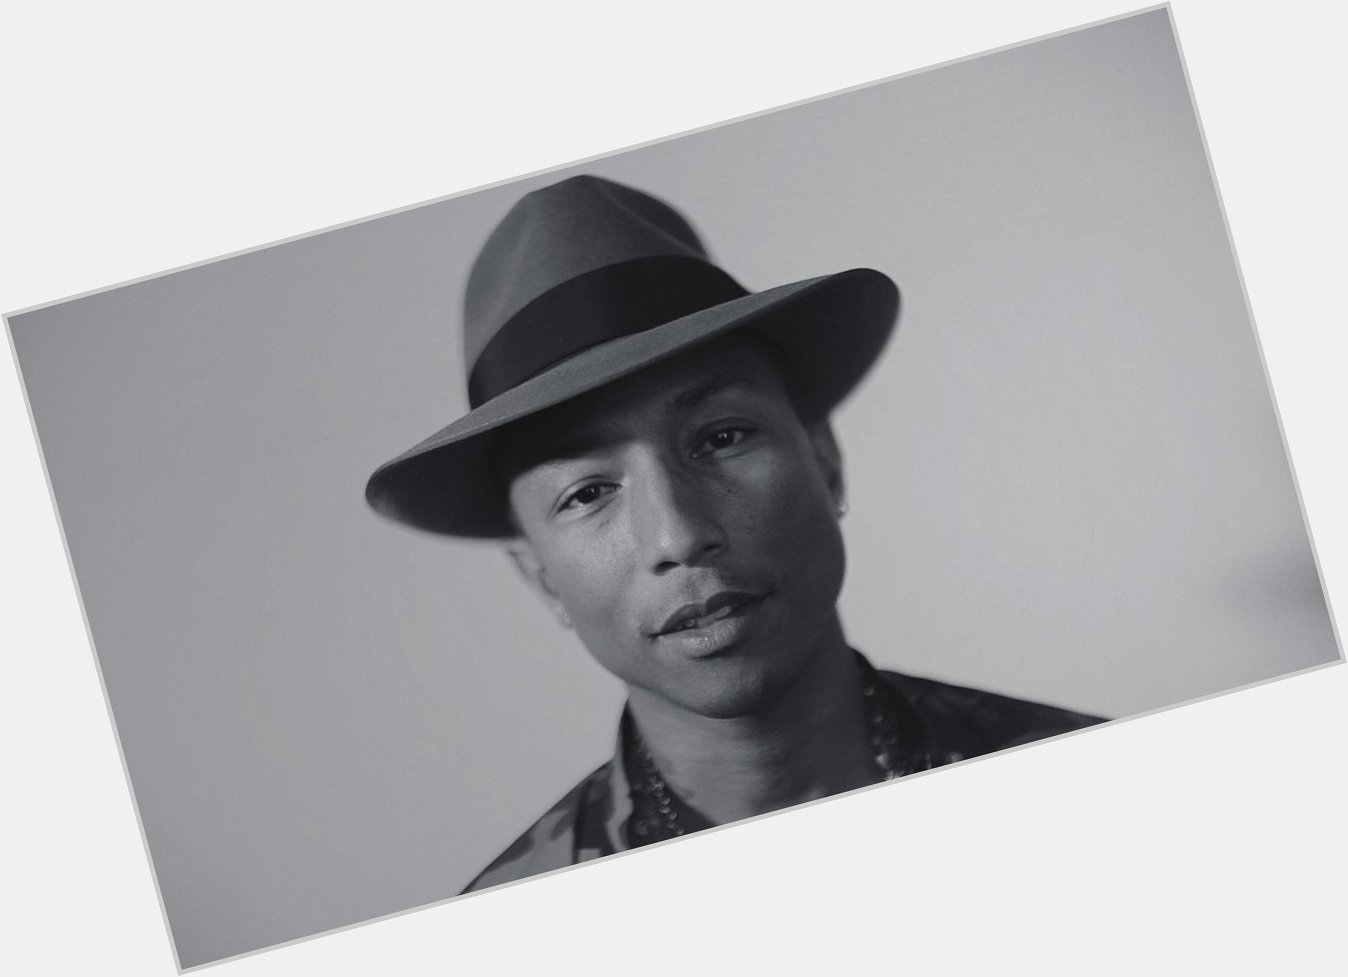 Happy 44th birthday to Pharrell Williams! 